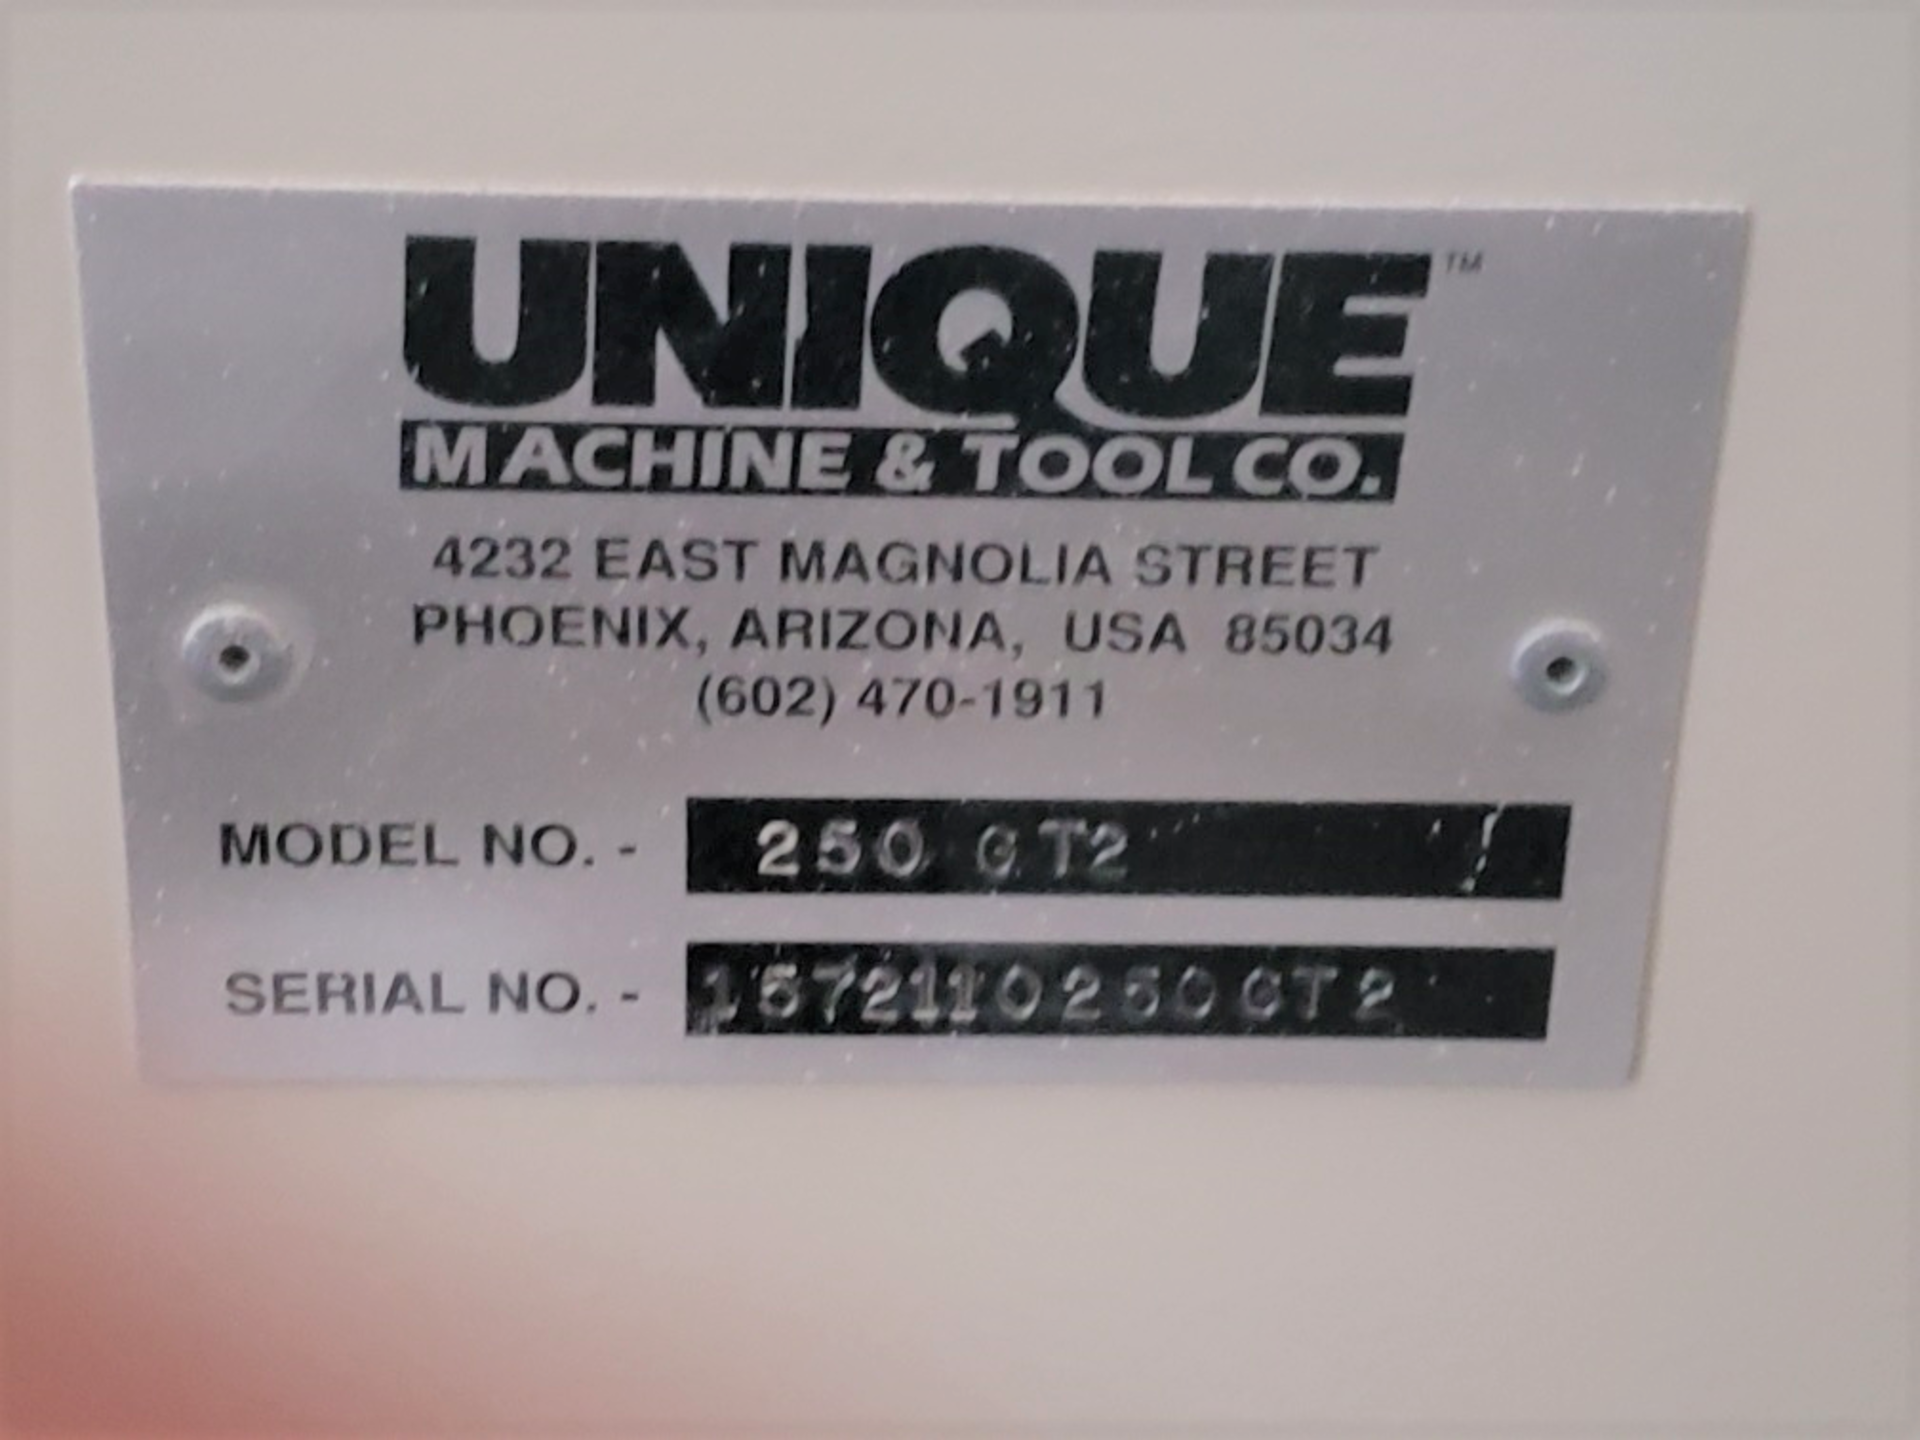 '12 UNIQUE 250 GT2 RAISED PANEL DOOR MACHINE, S/N 15721102250GT2 (EXCELLENT CONDITION) - Bild 2 aus 2